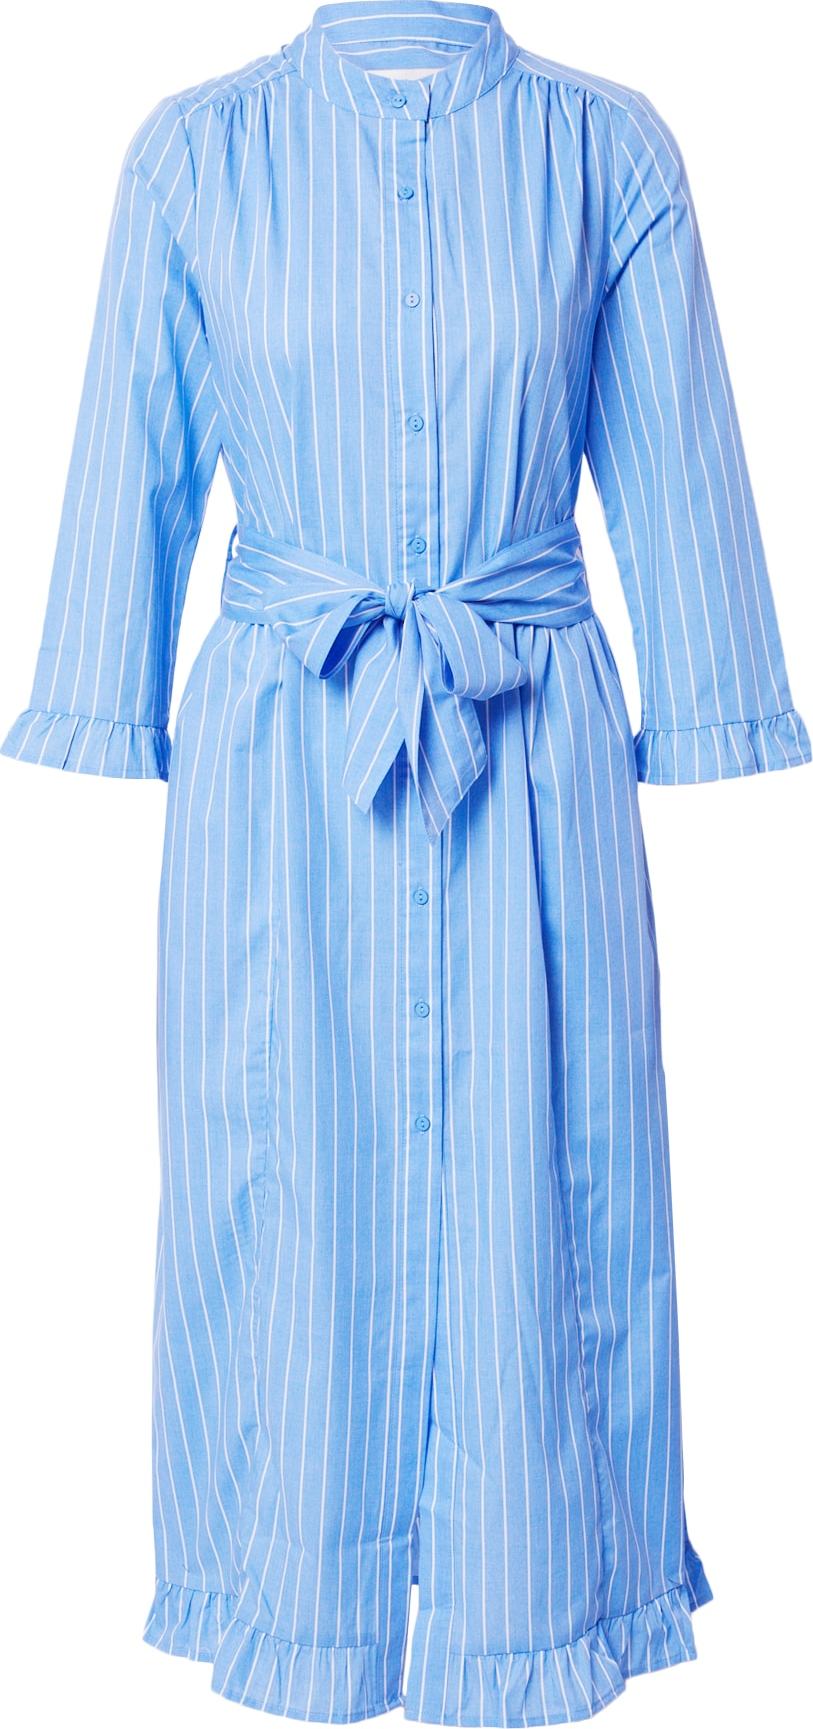 Lollys Laundry Košilové šaty 'Harper' modrá / bílá